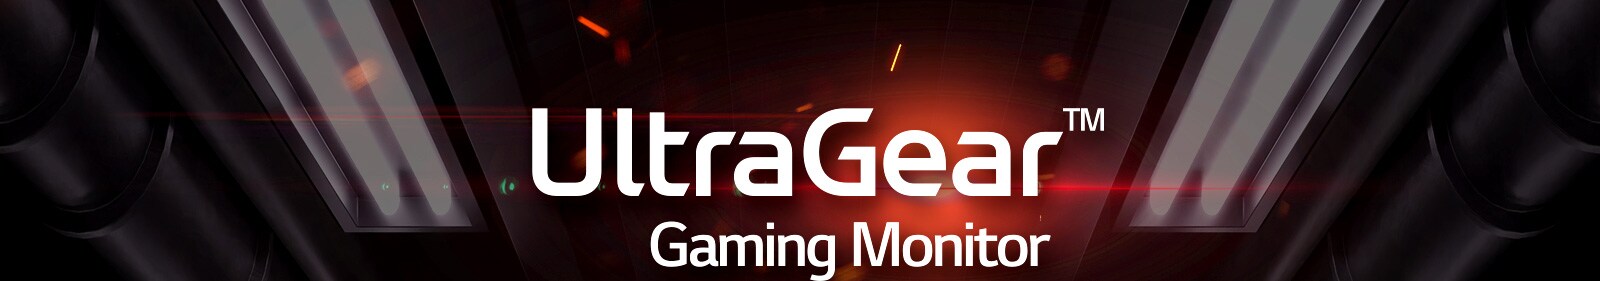 UltraGear™ gaming monitor